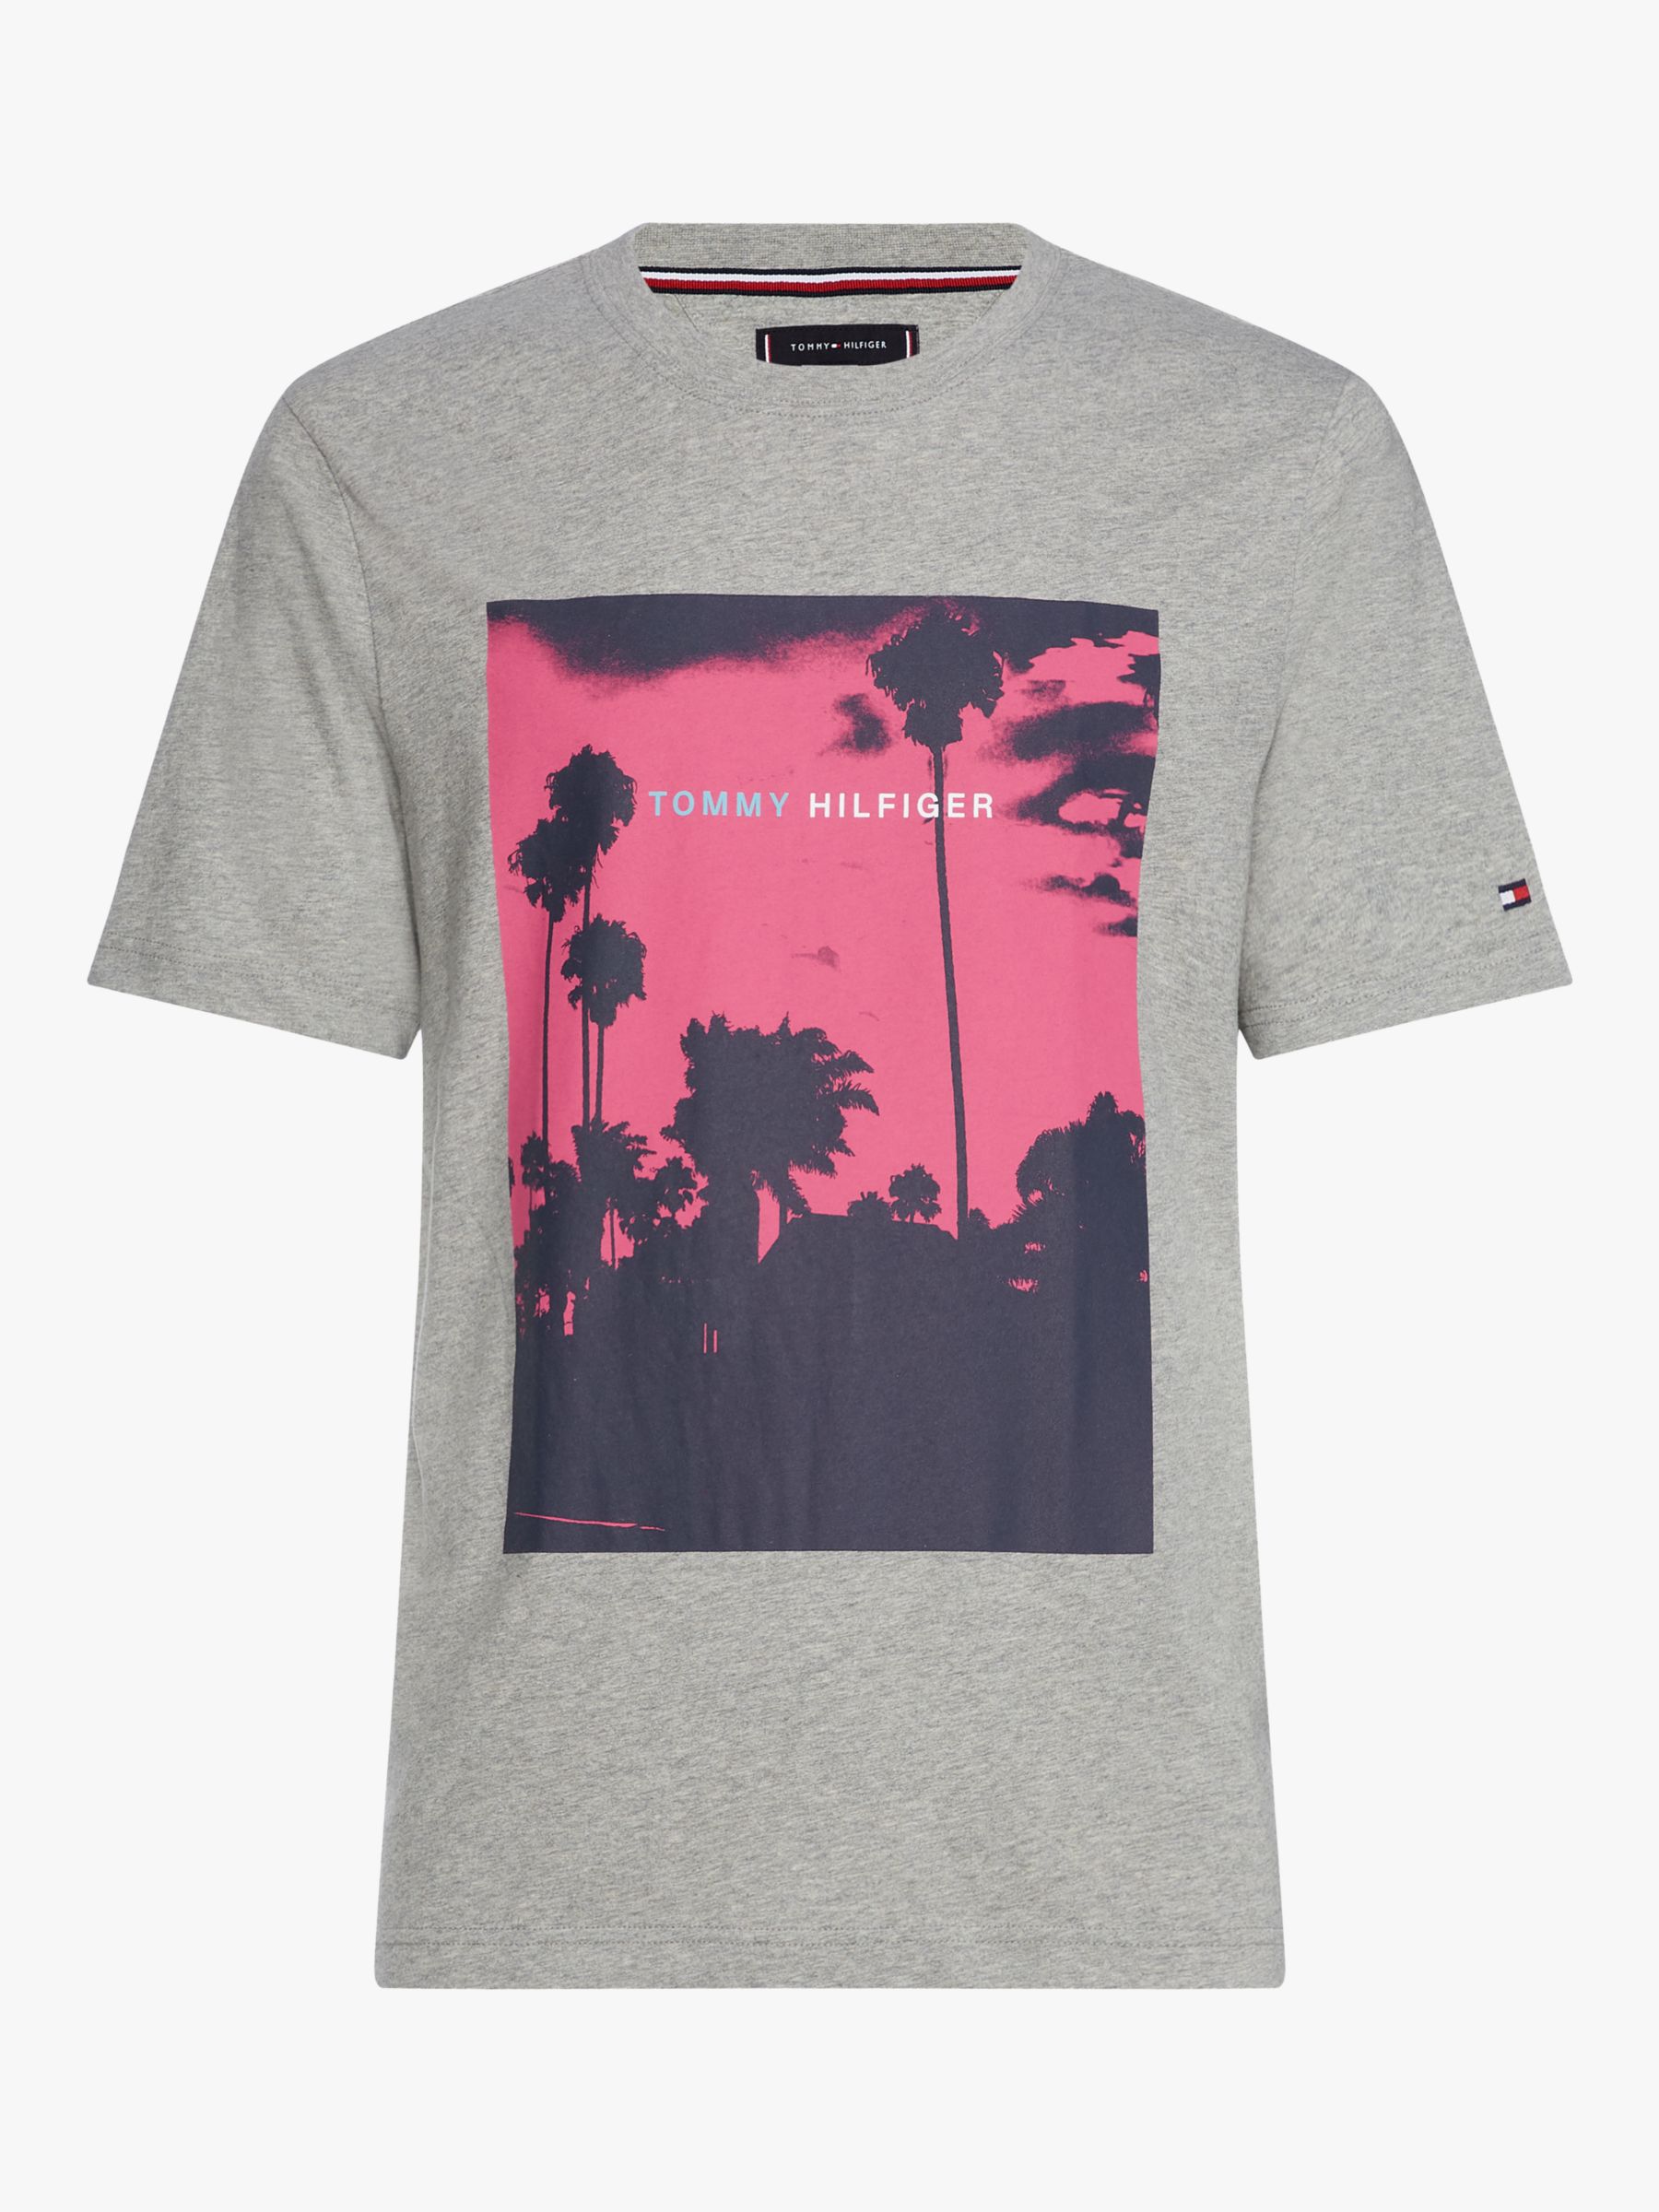 tommy hilfiger palm tree shirt Online 